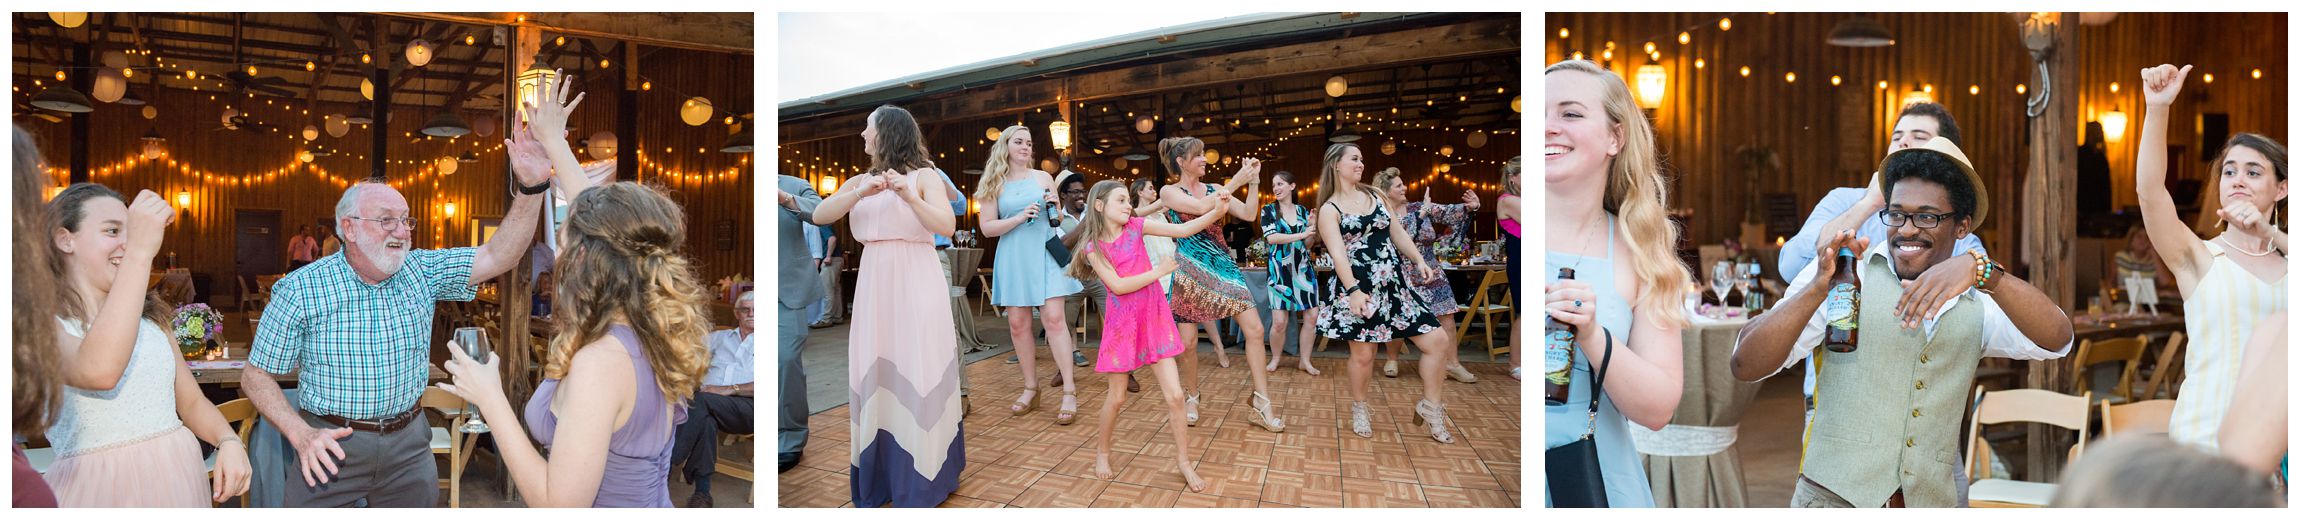 guests dancing at wedding reception in barn at Wolftrap Farm